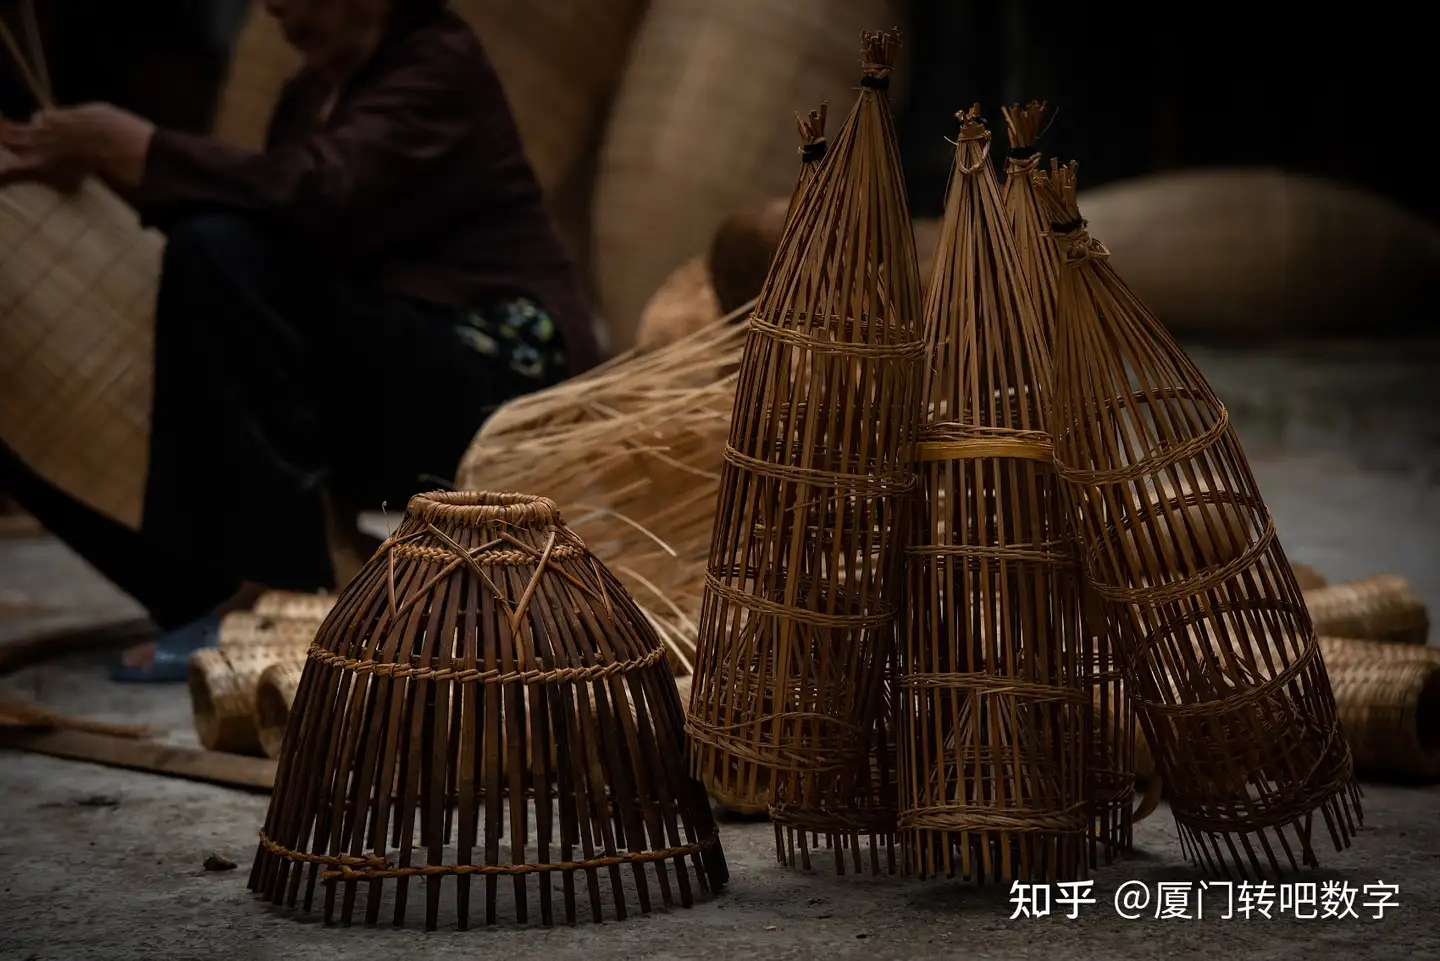 Fishing trap made of bamboo